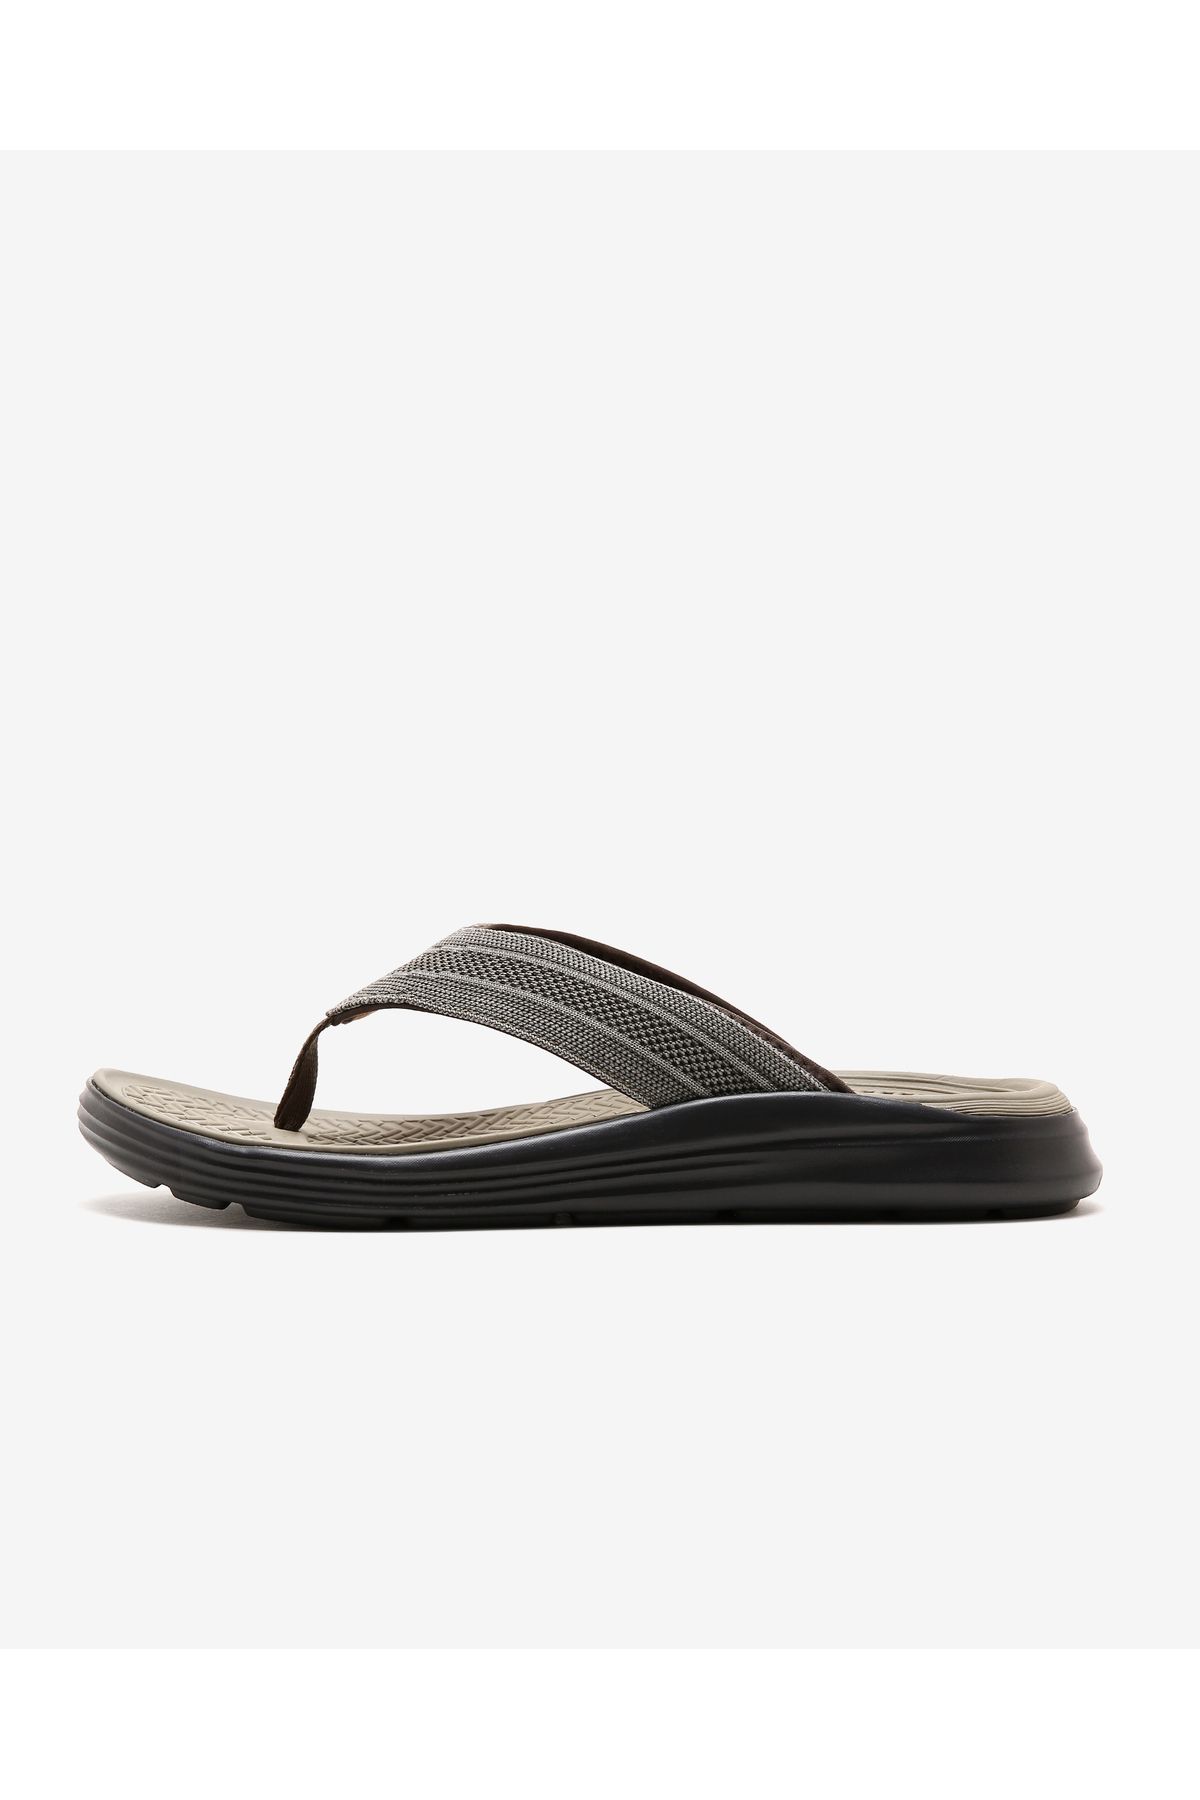 Skechers Thong Sandal Erkek Kahverengi Parmak Arası Terlik 204383 Ltbr